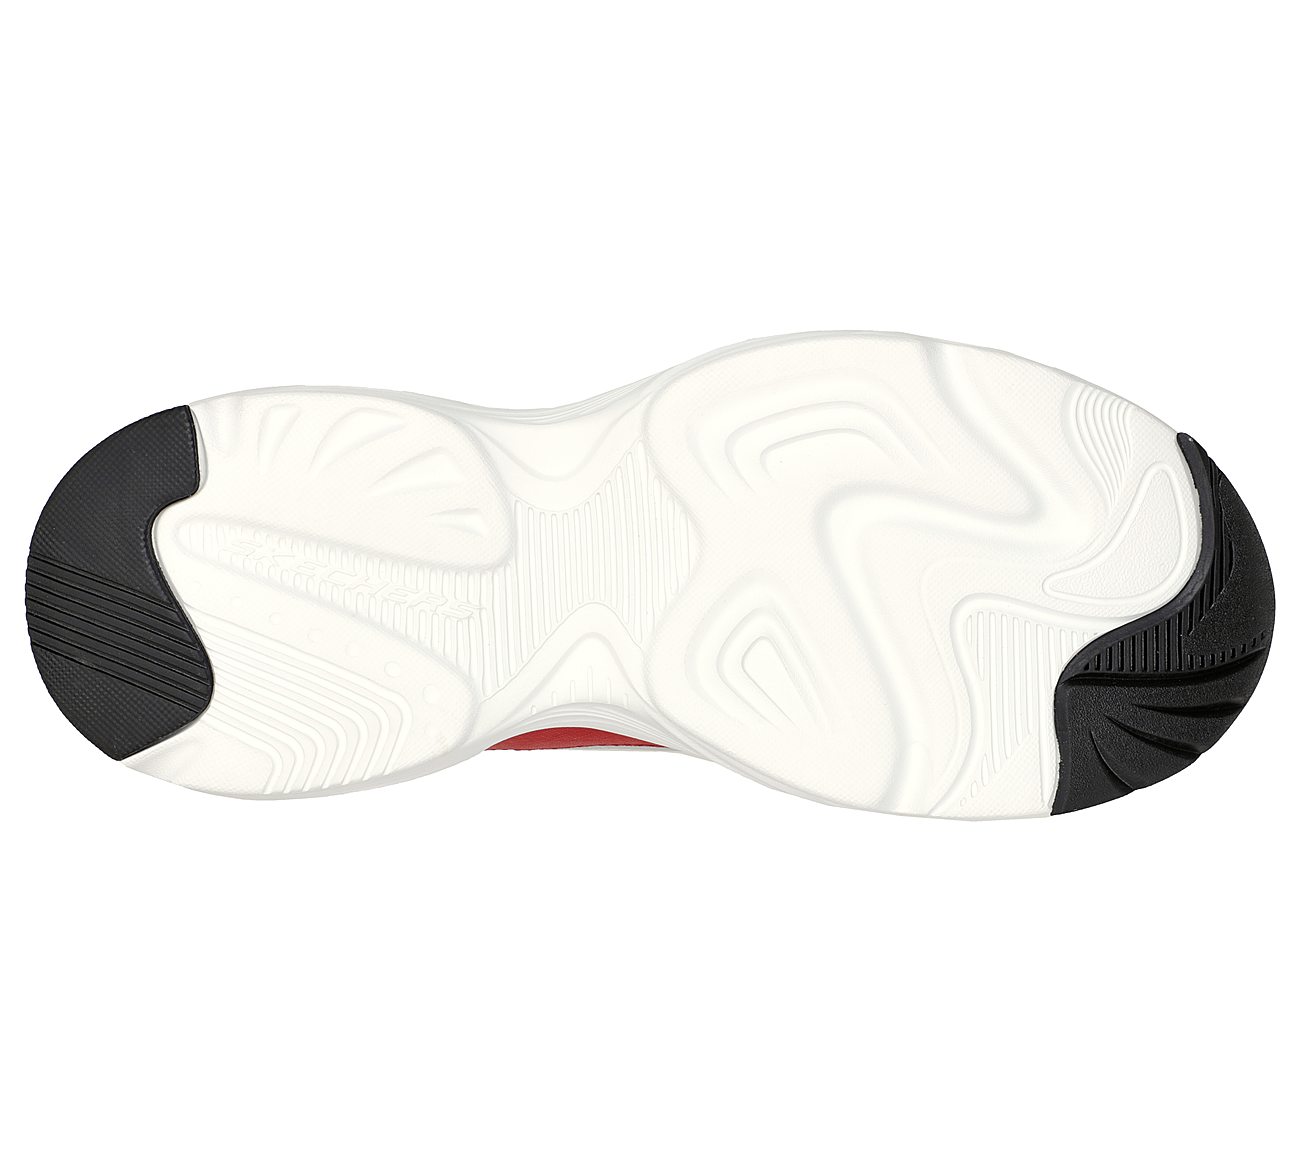 STAMINA AIRY - MOREMI, WHITE/RED Footwear Bottom View